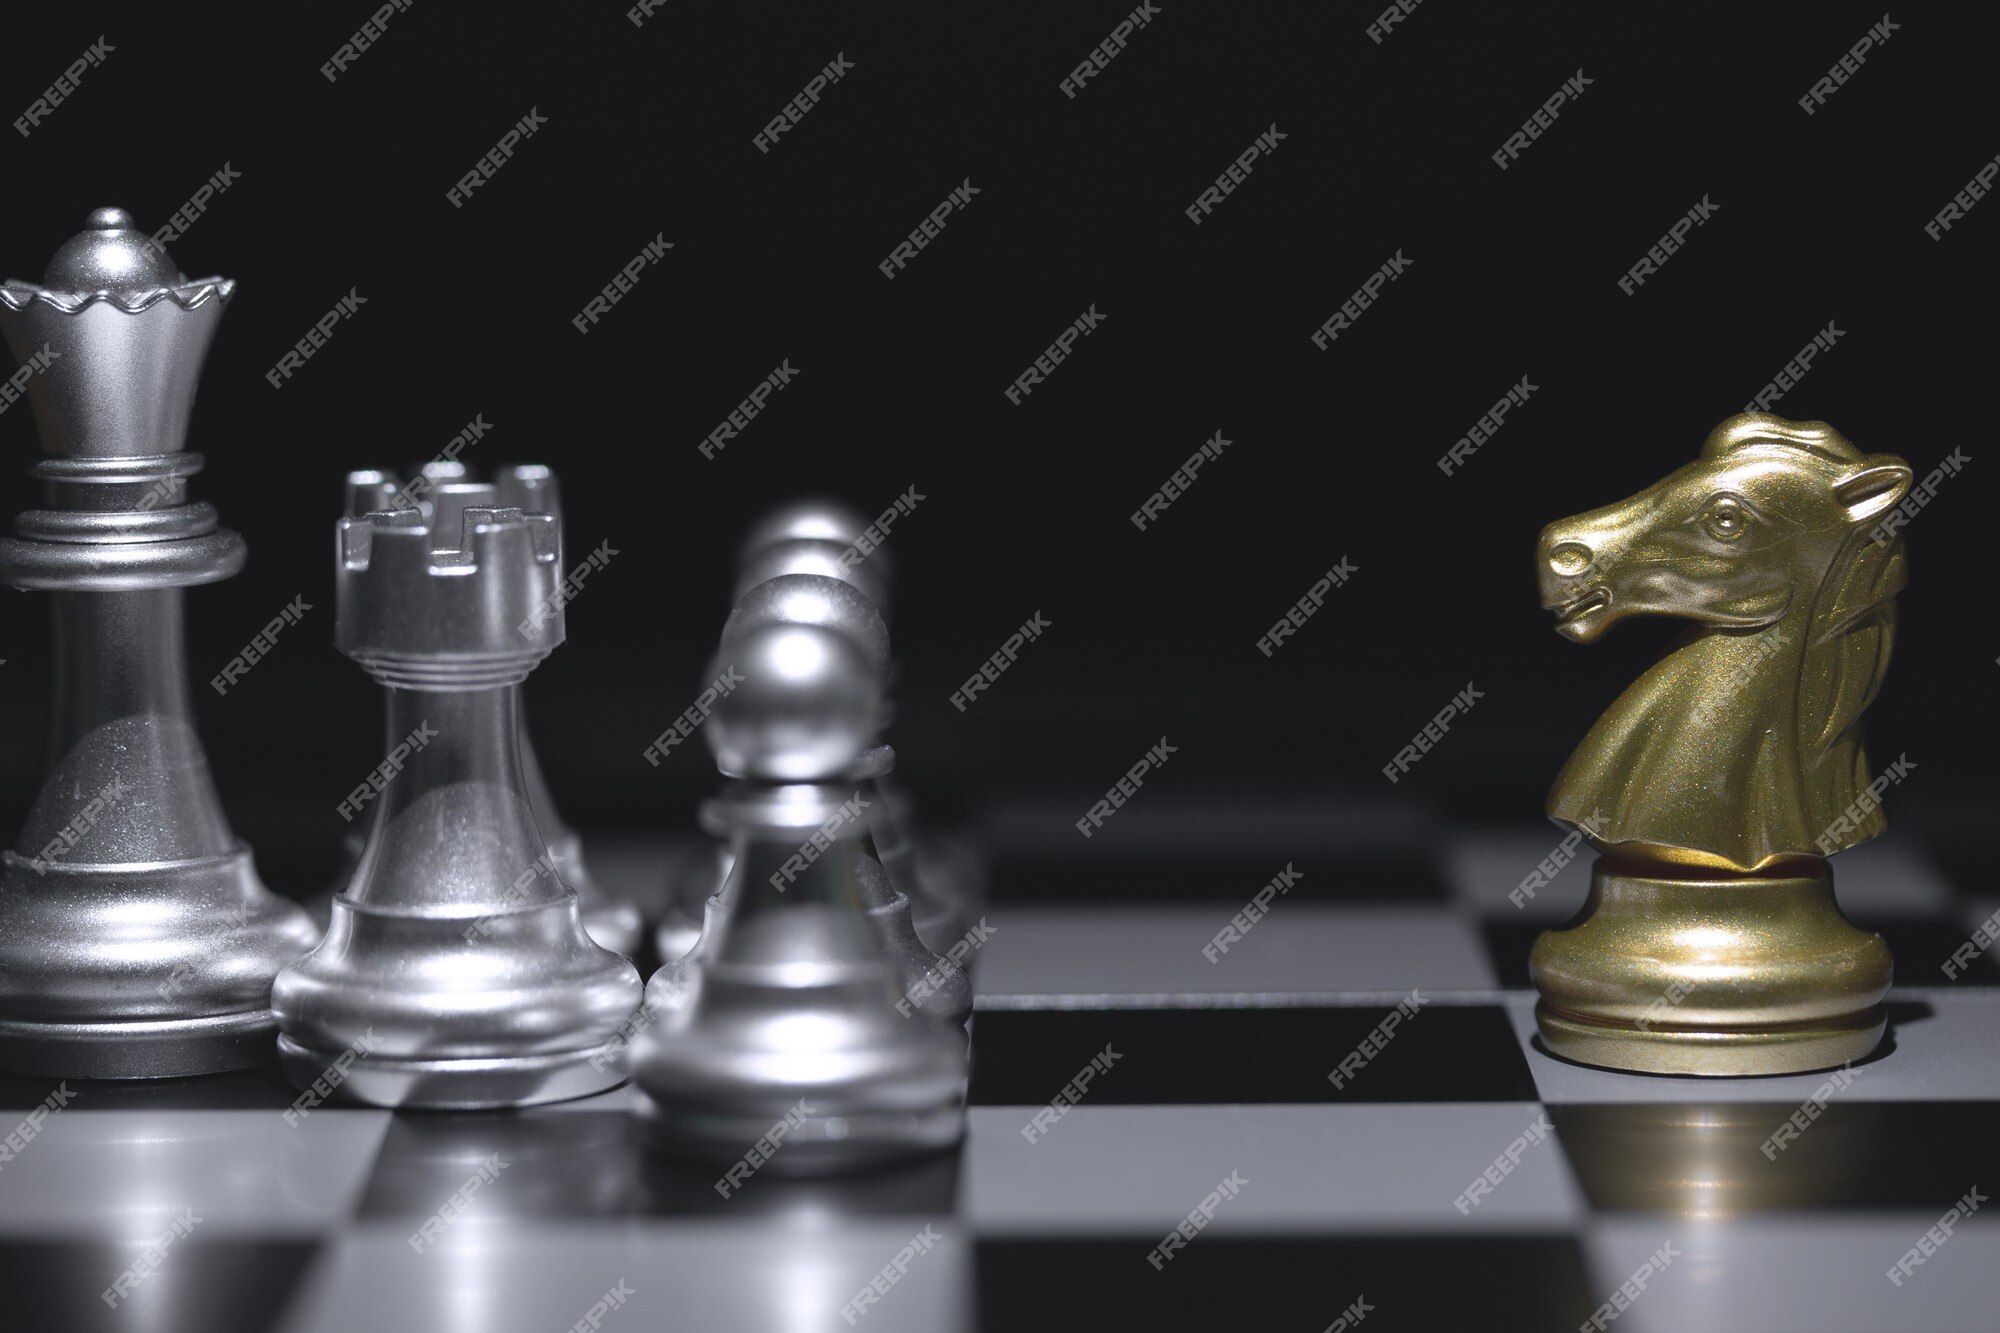 rei de xadrez dourado sozinho no tabuleiro de xadrez 7291724 Foto